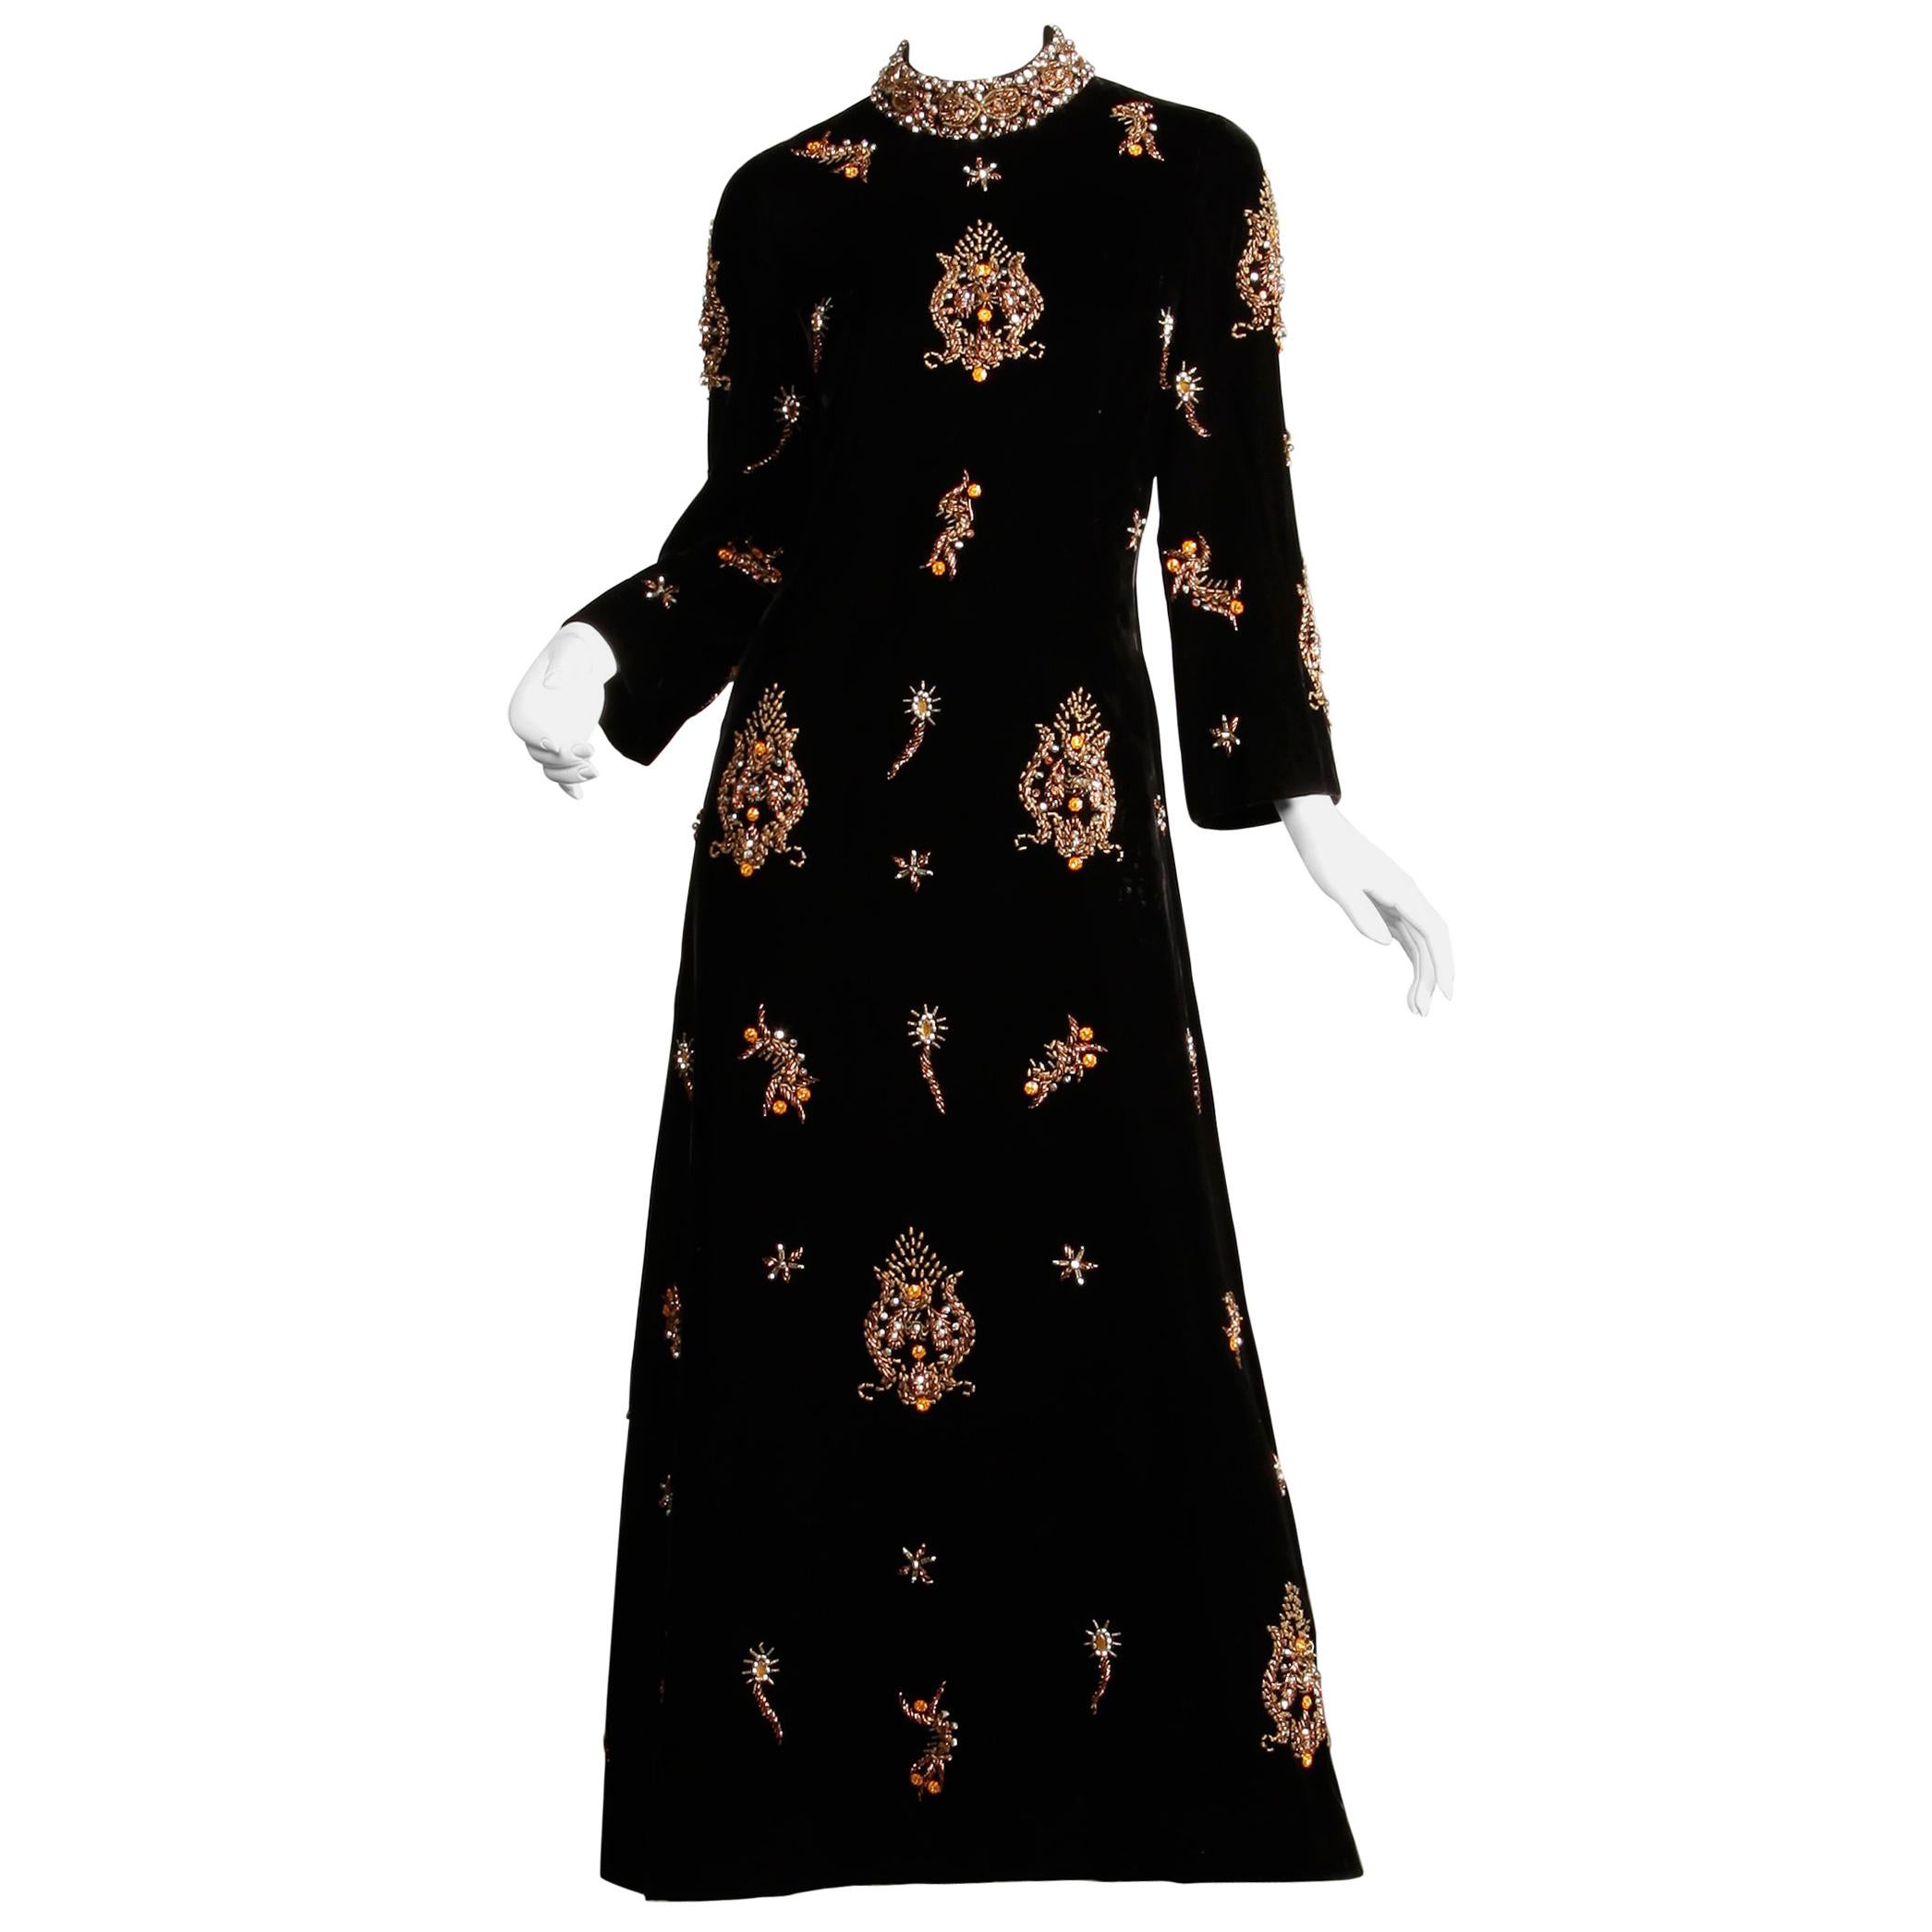 1960s Vintage Black Velvet Evening Gown Dress with Metallic Beaded Embellishment